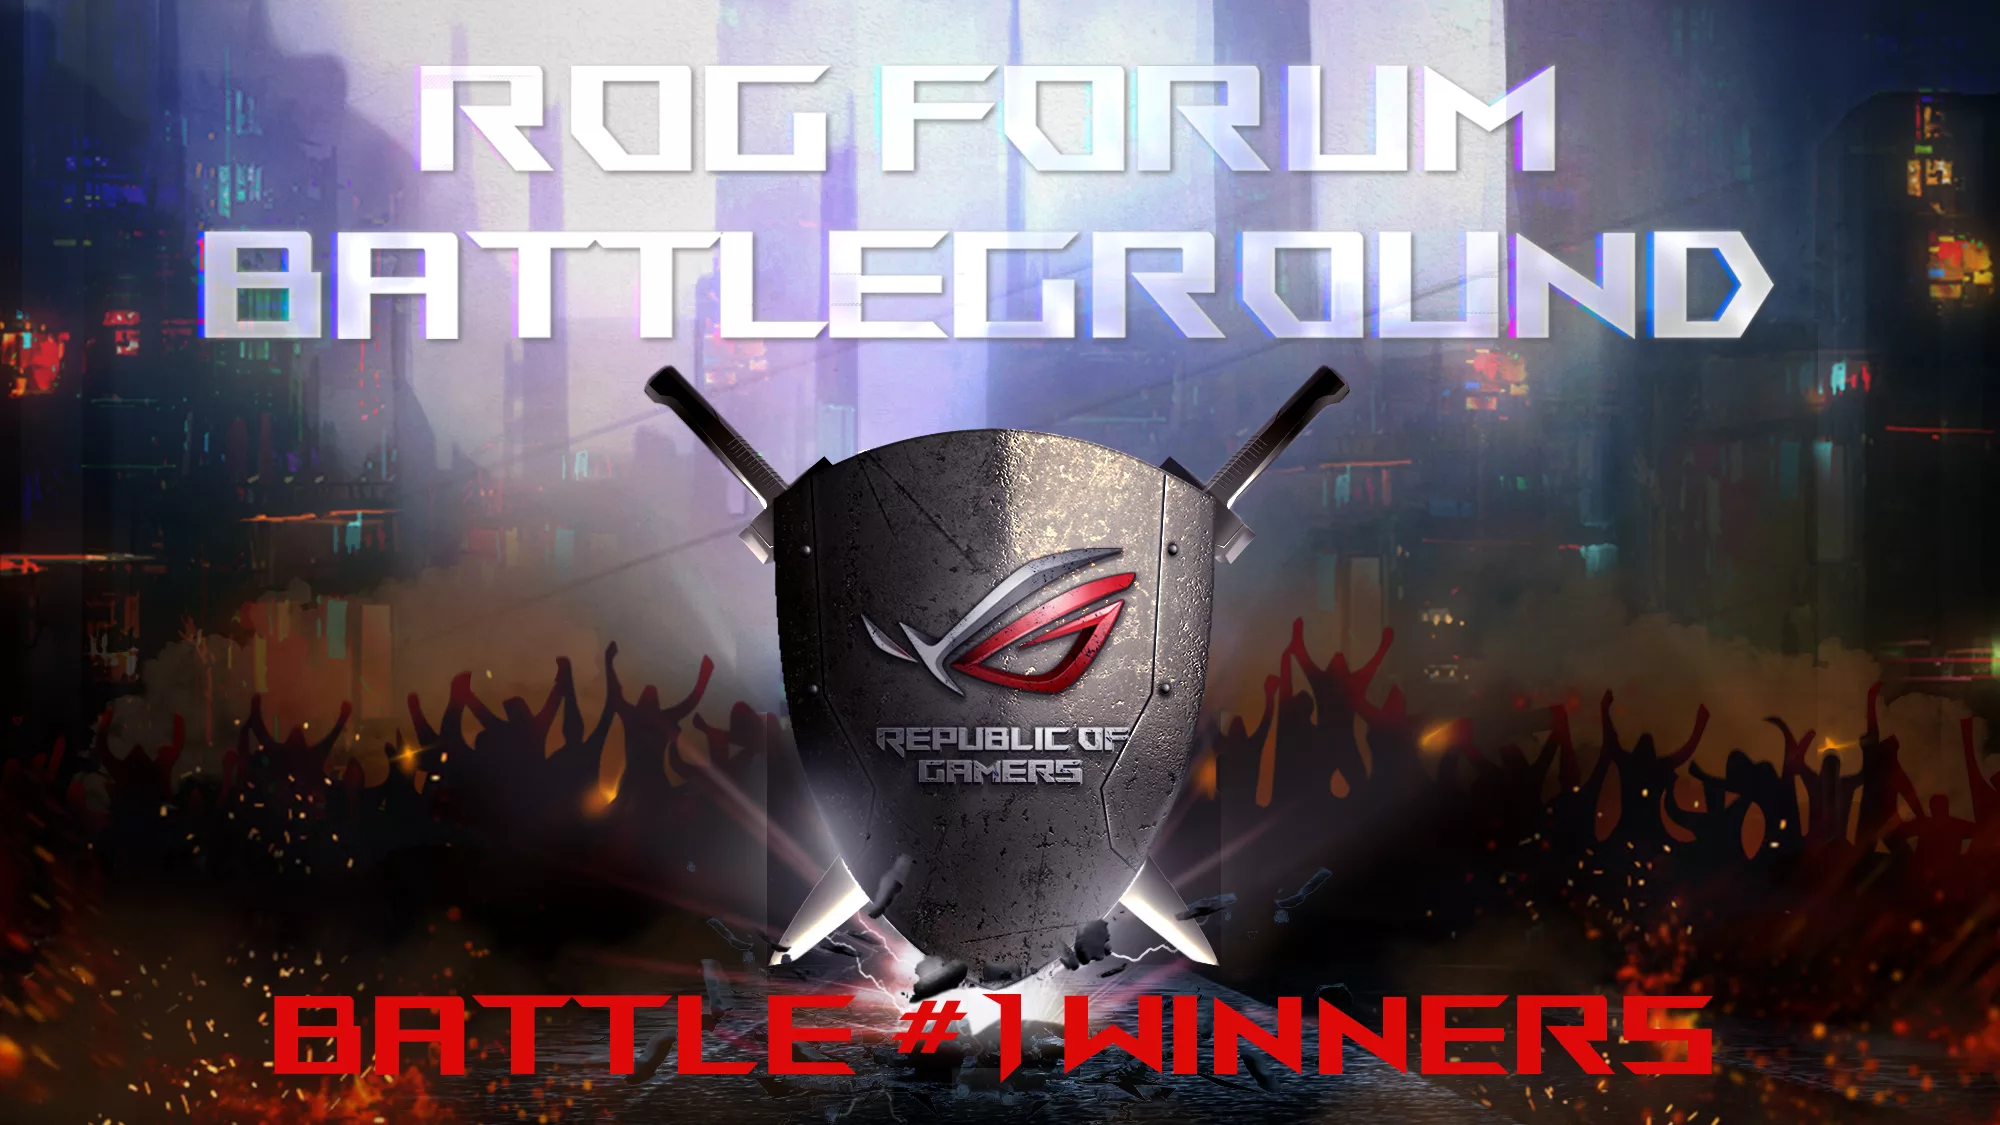 ROG Forum Battleground - Battle of the LoL Memes!